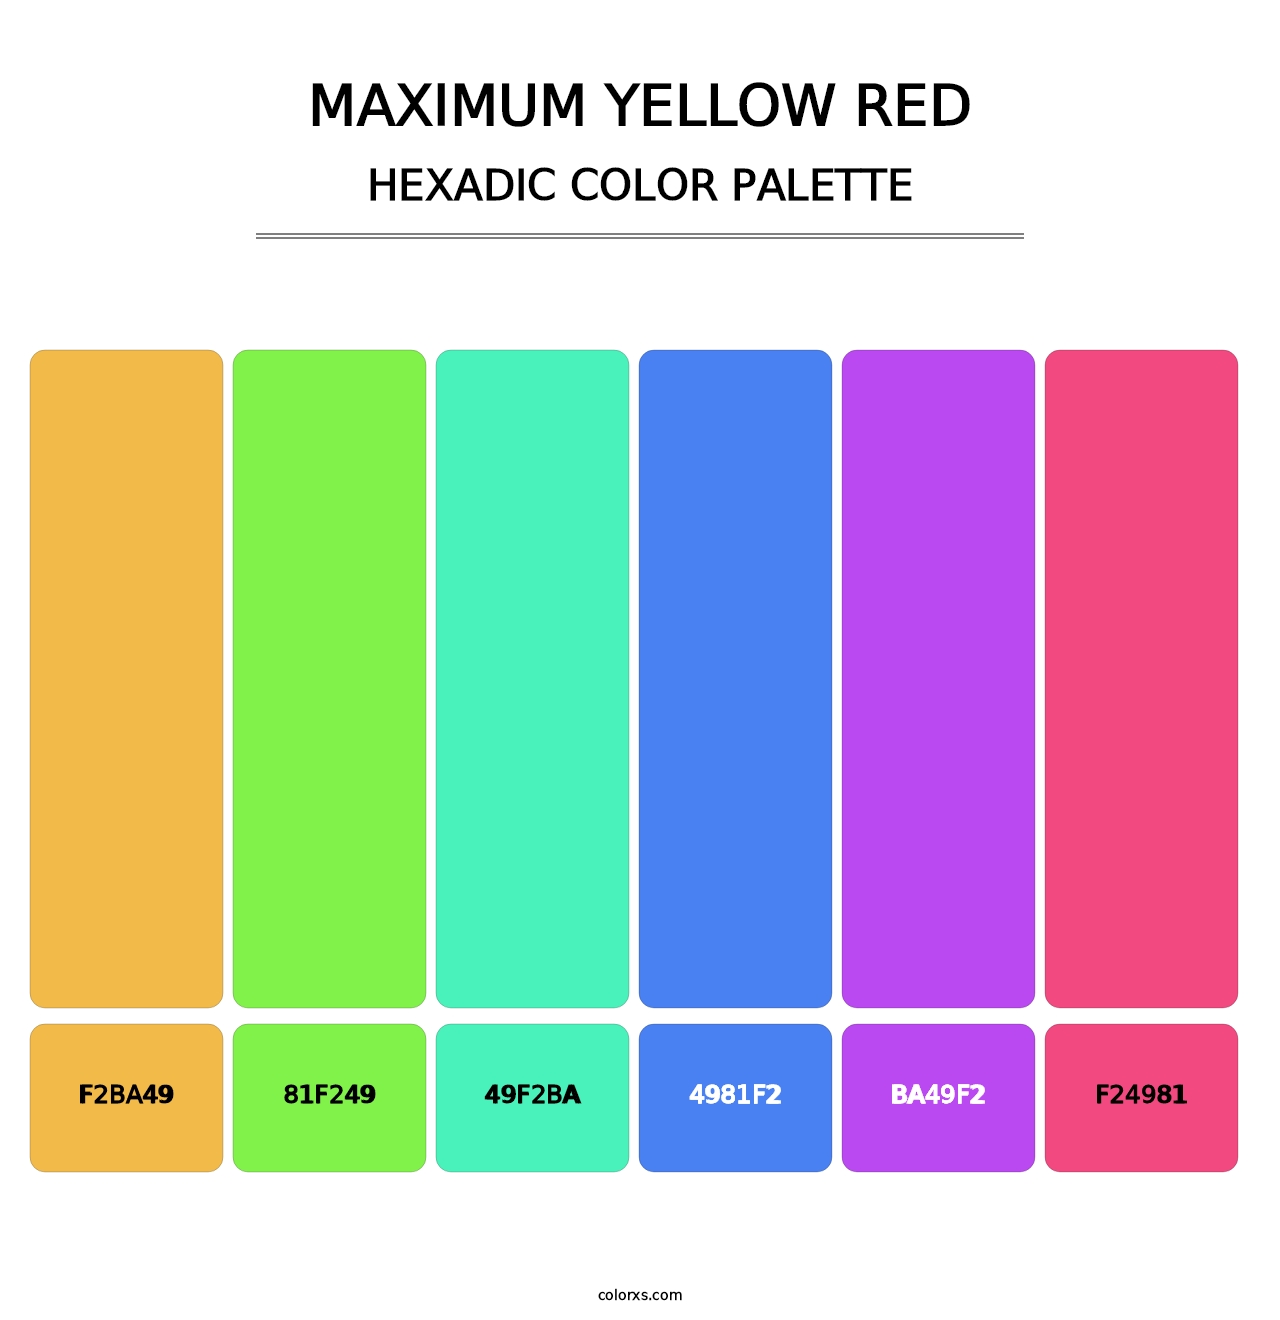 Maximum Yellow Red - Hexadic Color Palette